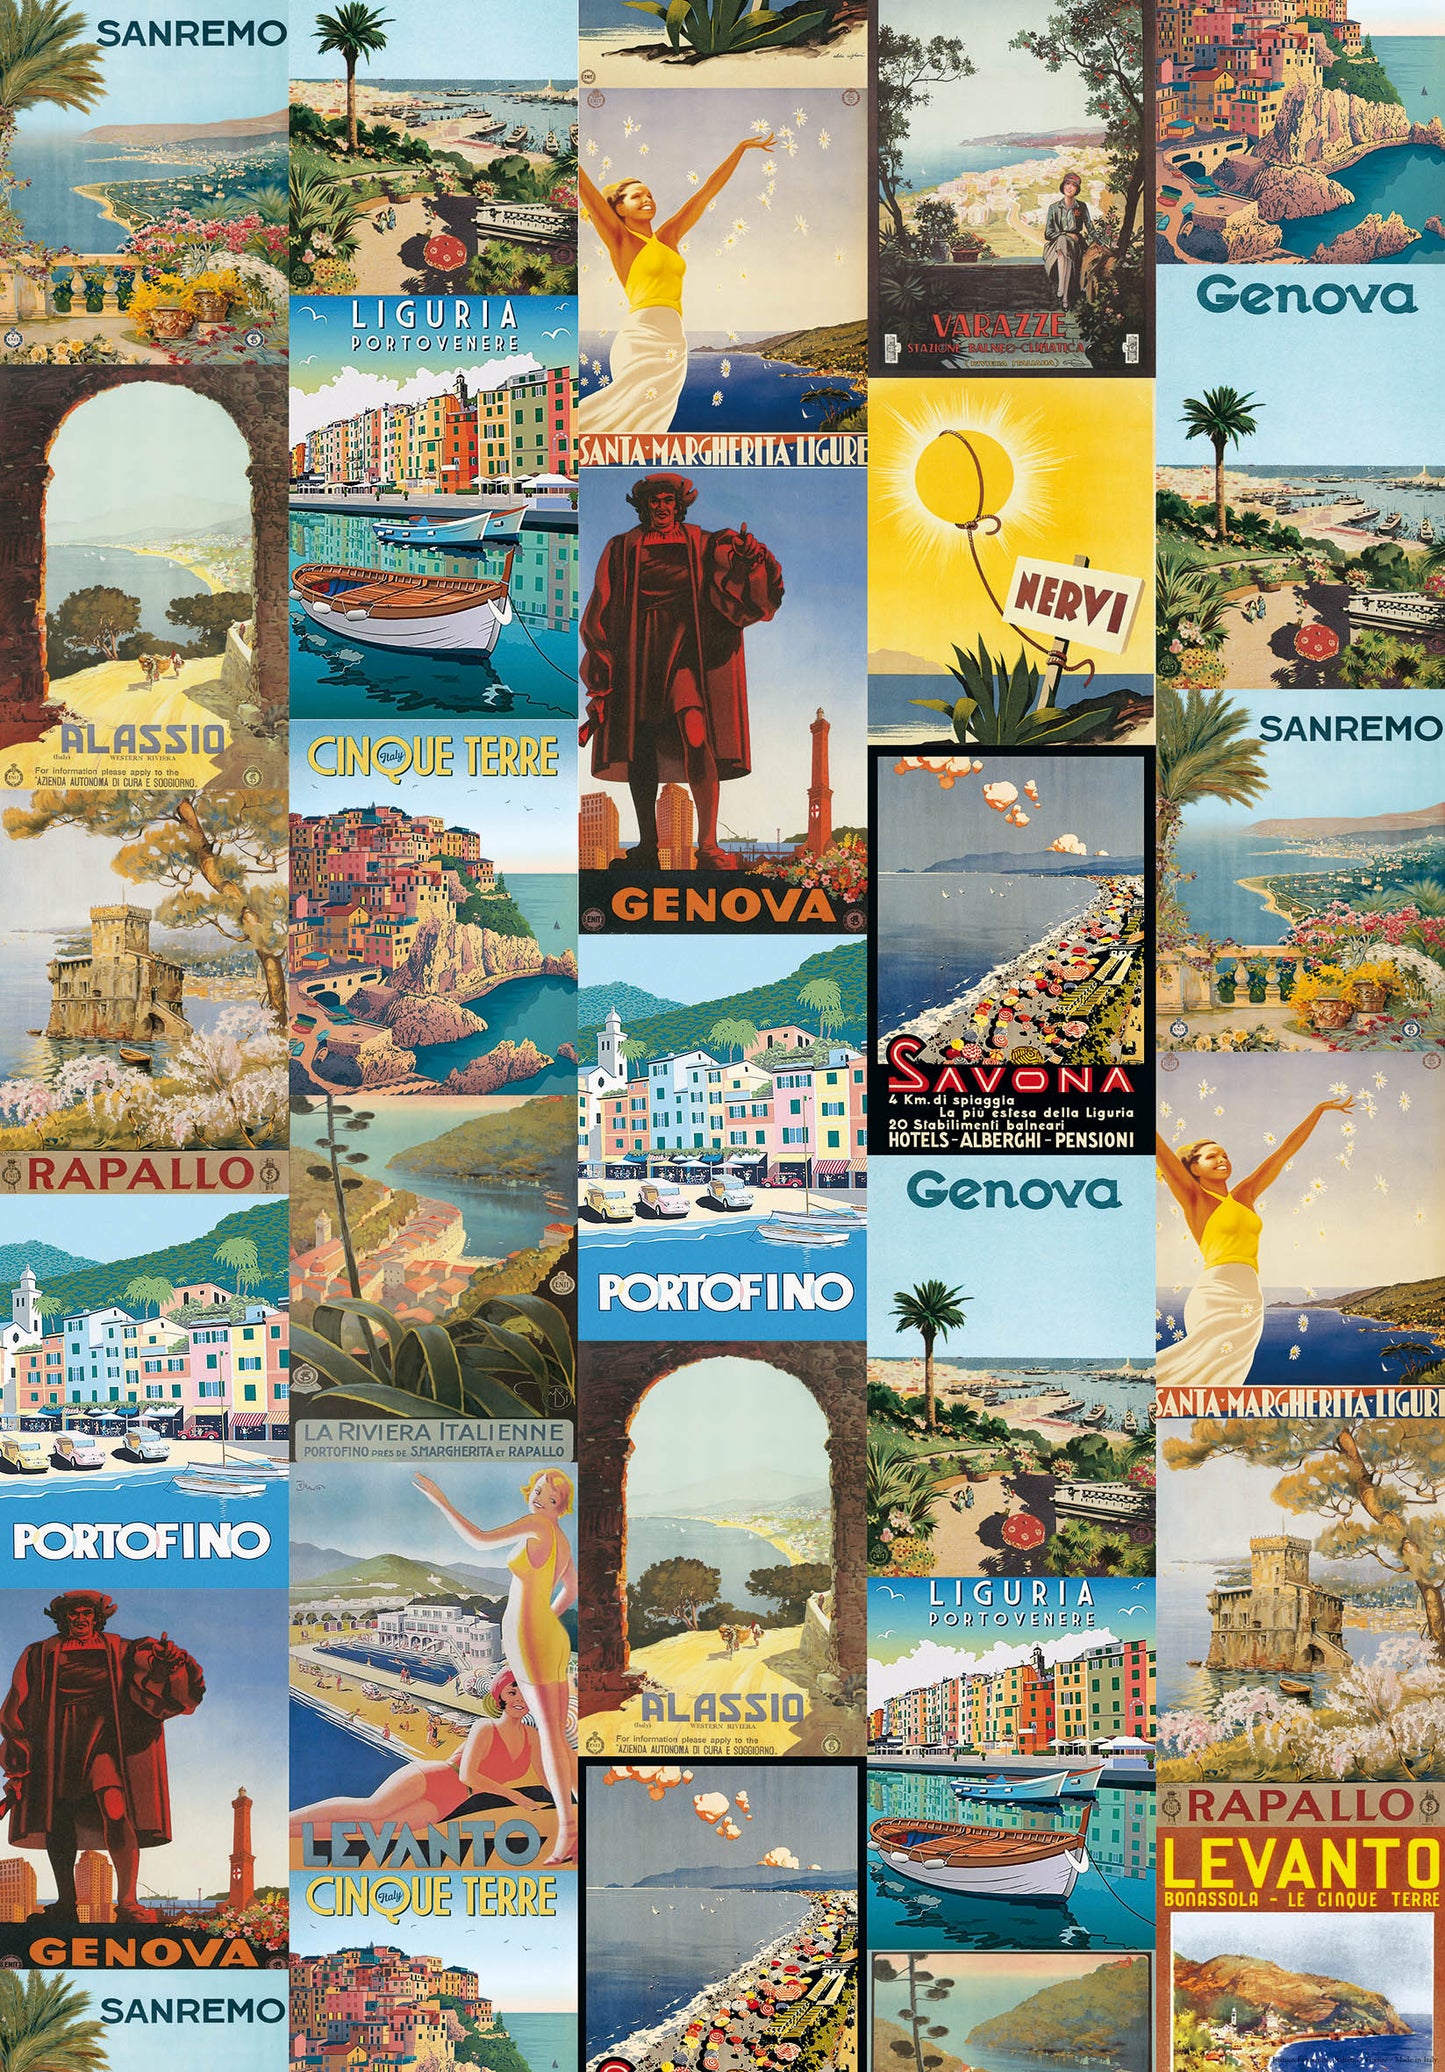 Postcards from Liguria